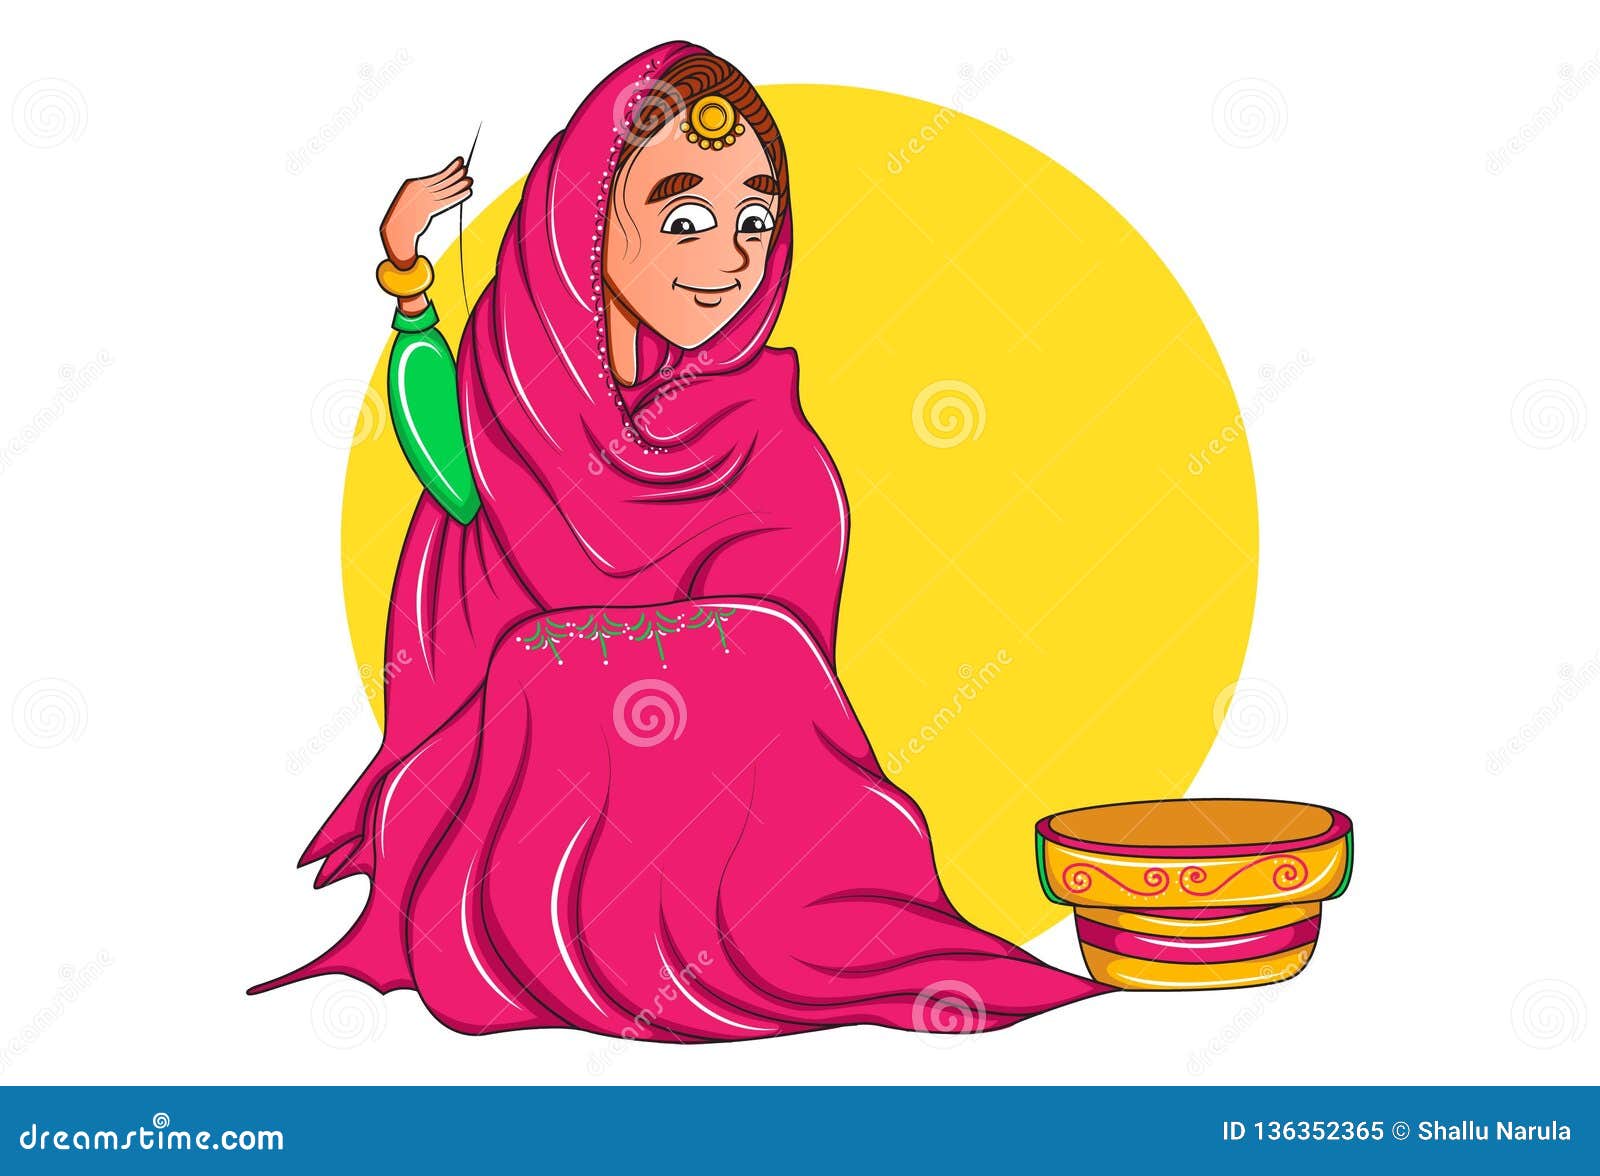 Illustration of Cartoon Punjabi Woman Stock Vector - Illustration of  indian, cheerful: 136352365